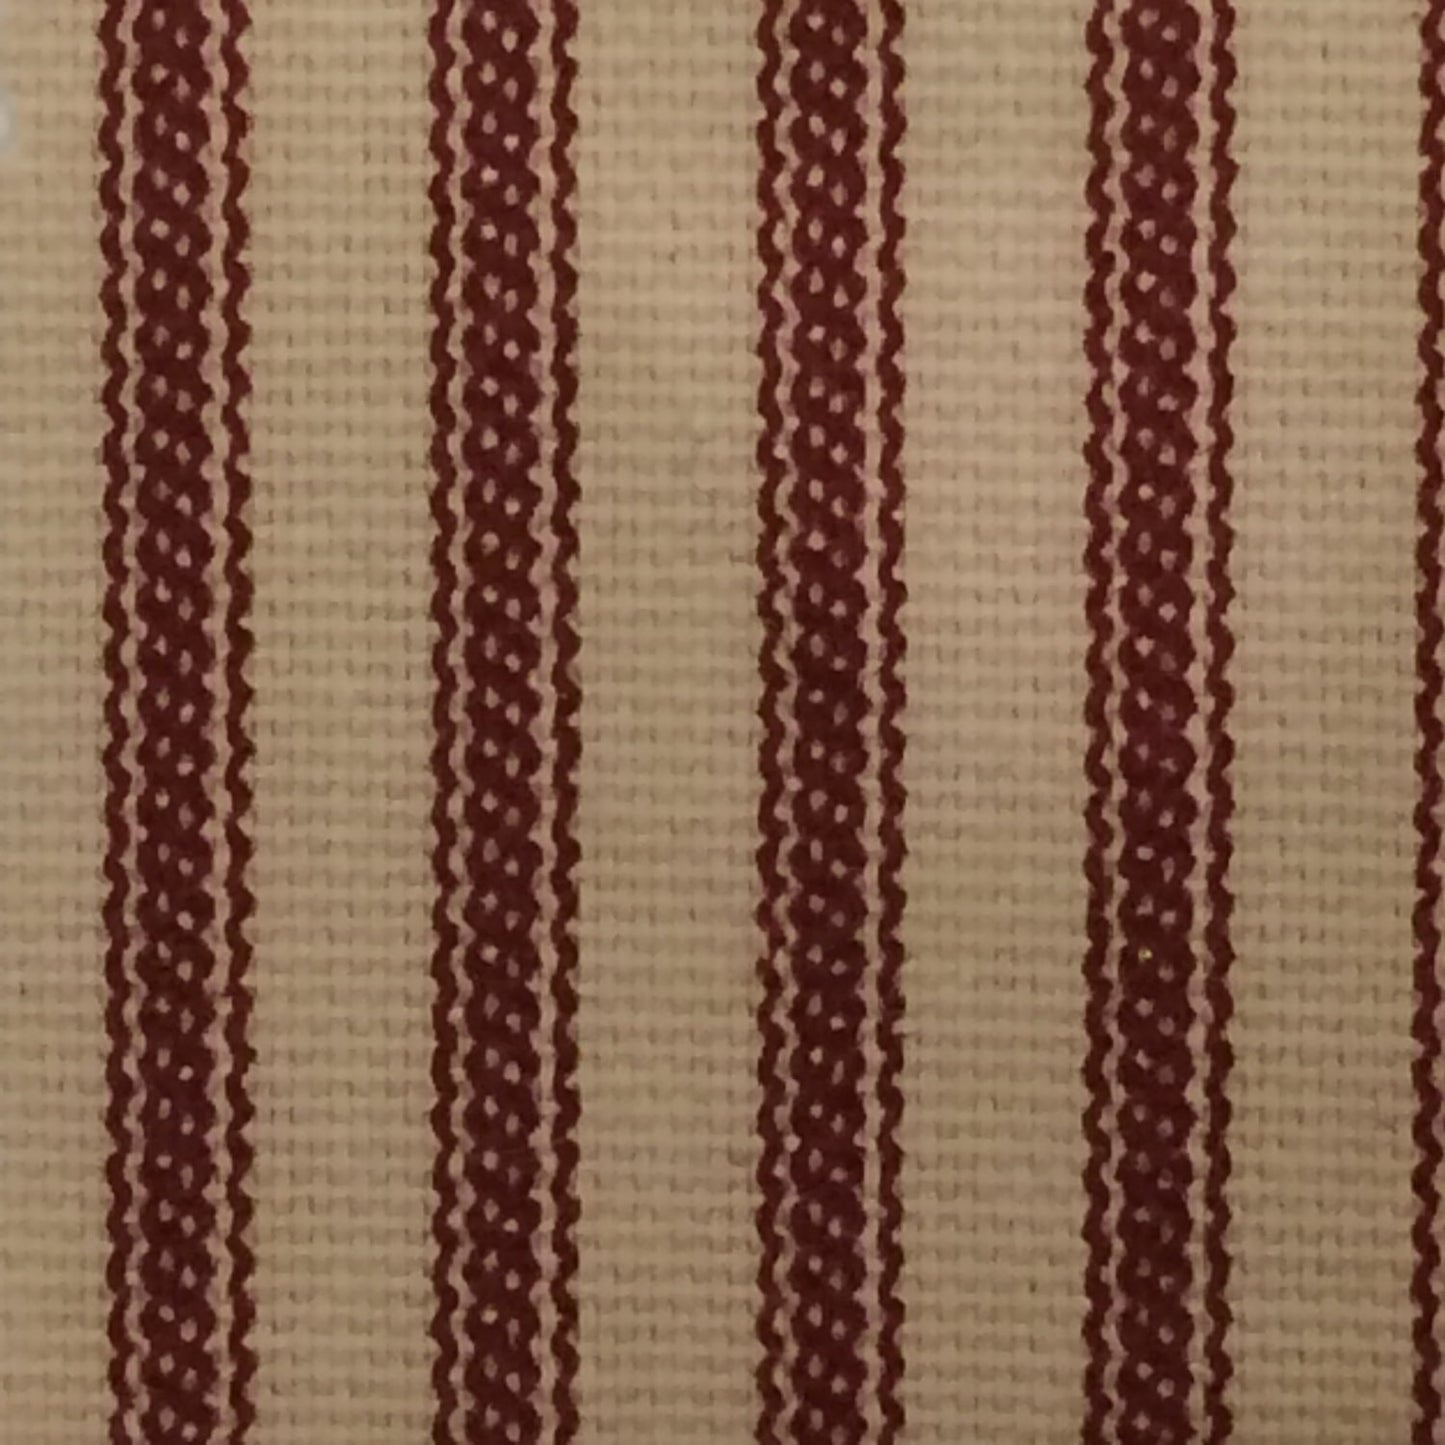 Ticking Stripe Shower Curtain Black, Brown, Grey, Navy, Red  72x72 or custom size